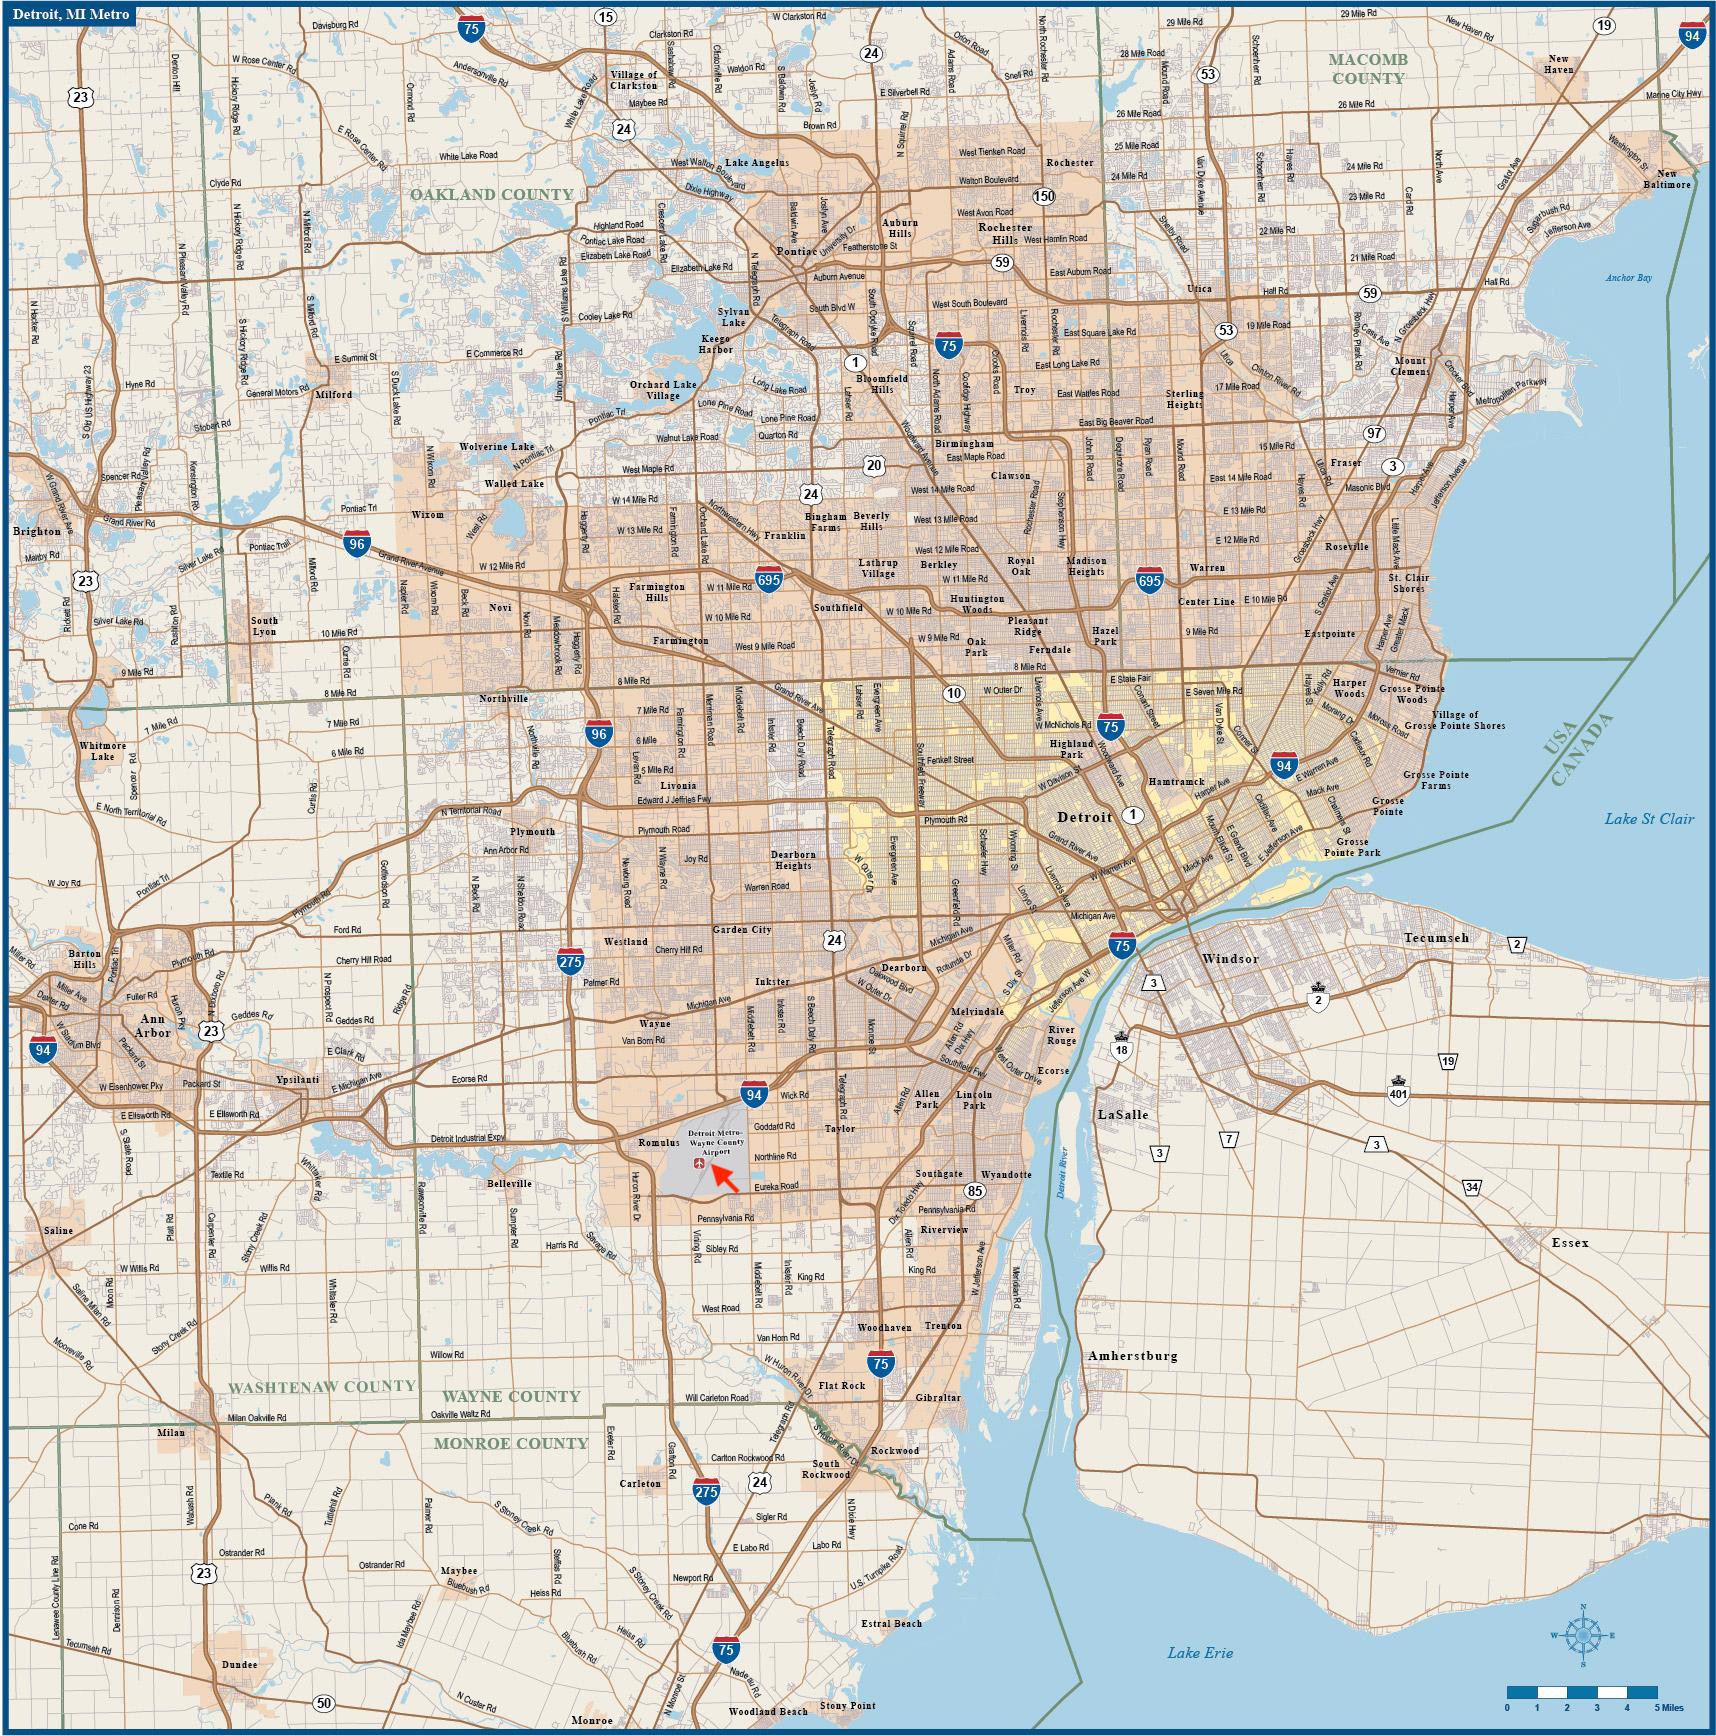 Map Of Metro Detroit Map Of Detroit Airport: Airport Terminals And Airport Gates Of Detroit